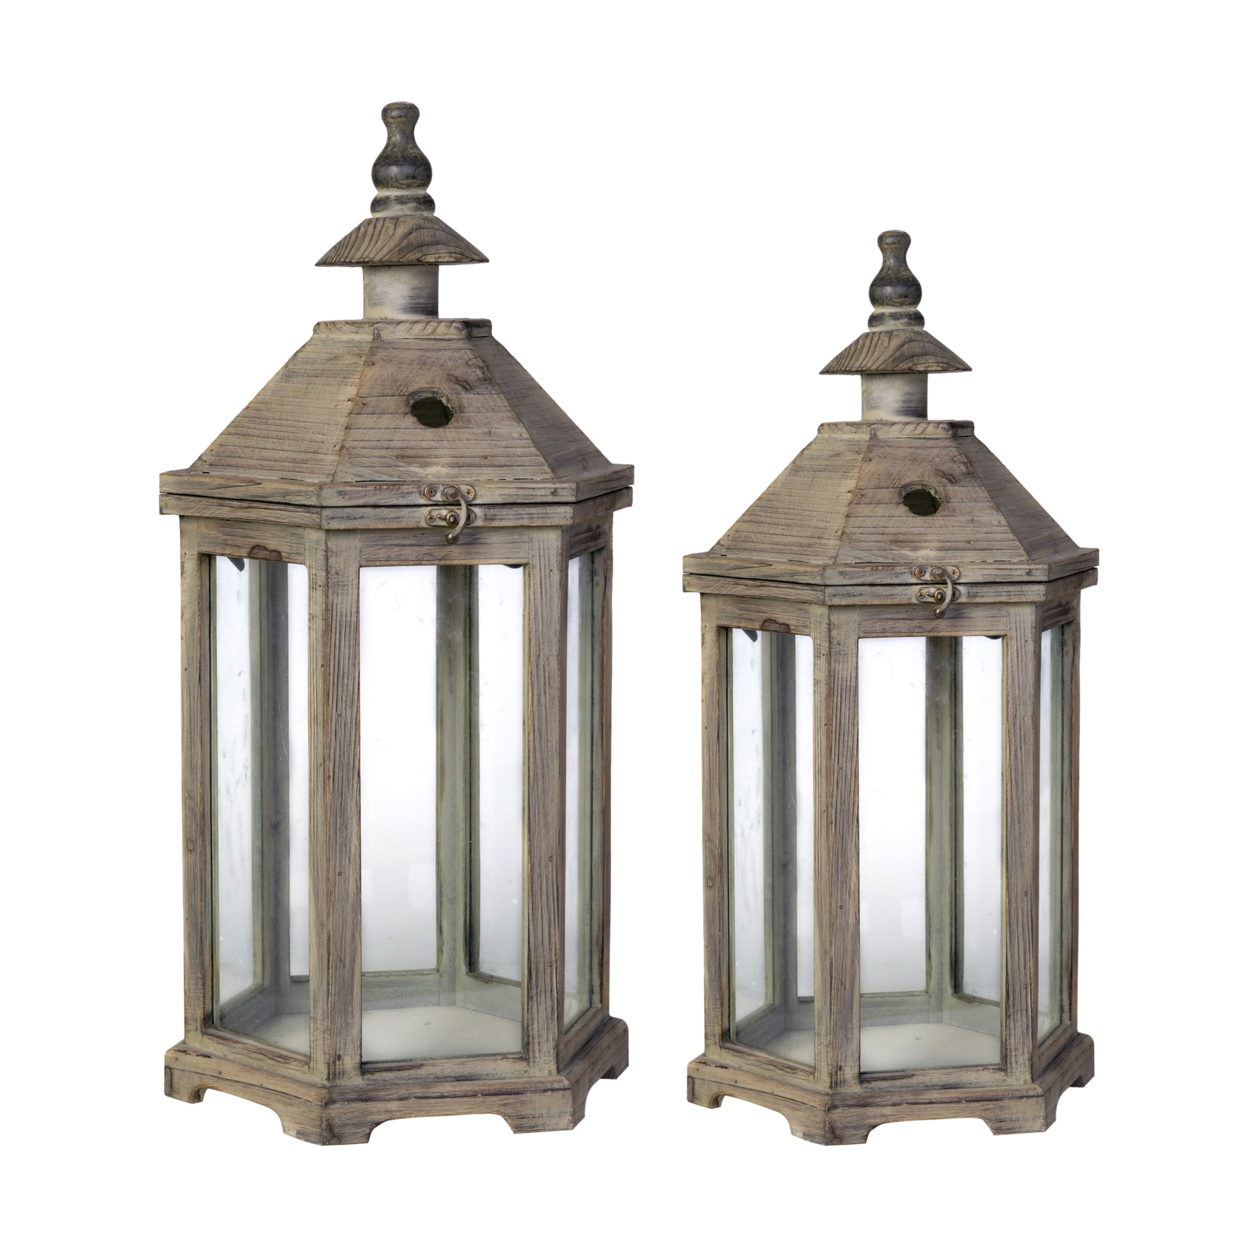 Temple Design Wooden Lantern With Glass Panels, Brown, Set Of 2- Saltoro Sherpi